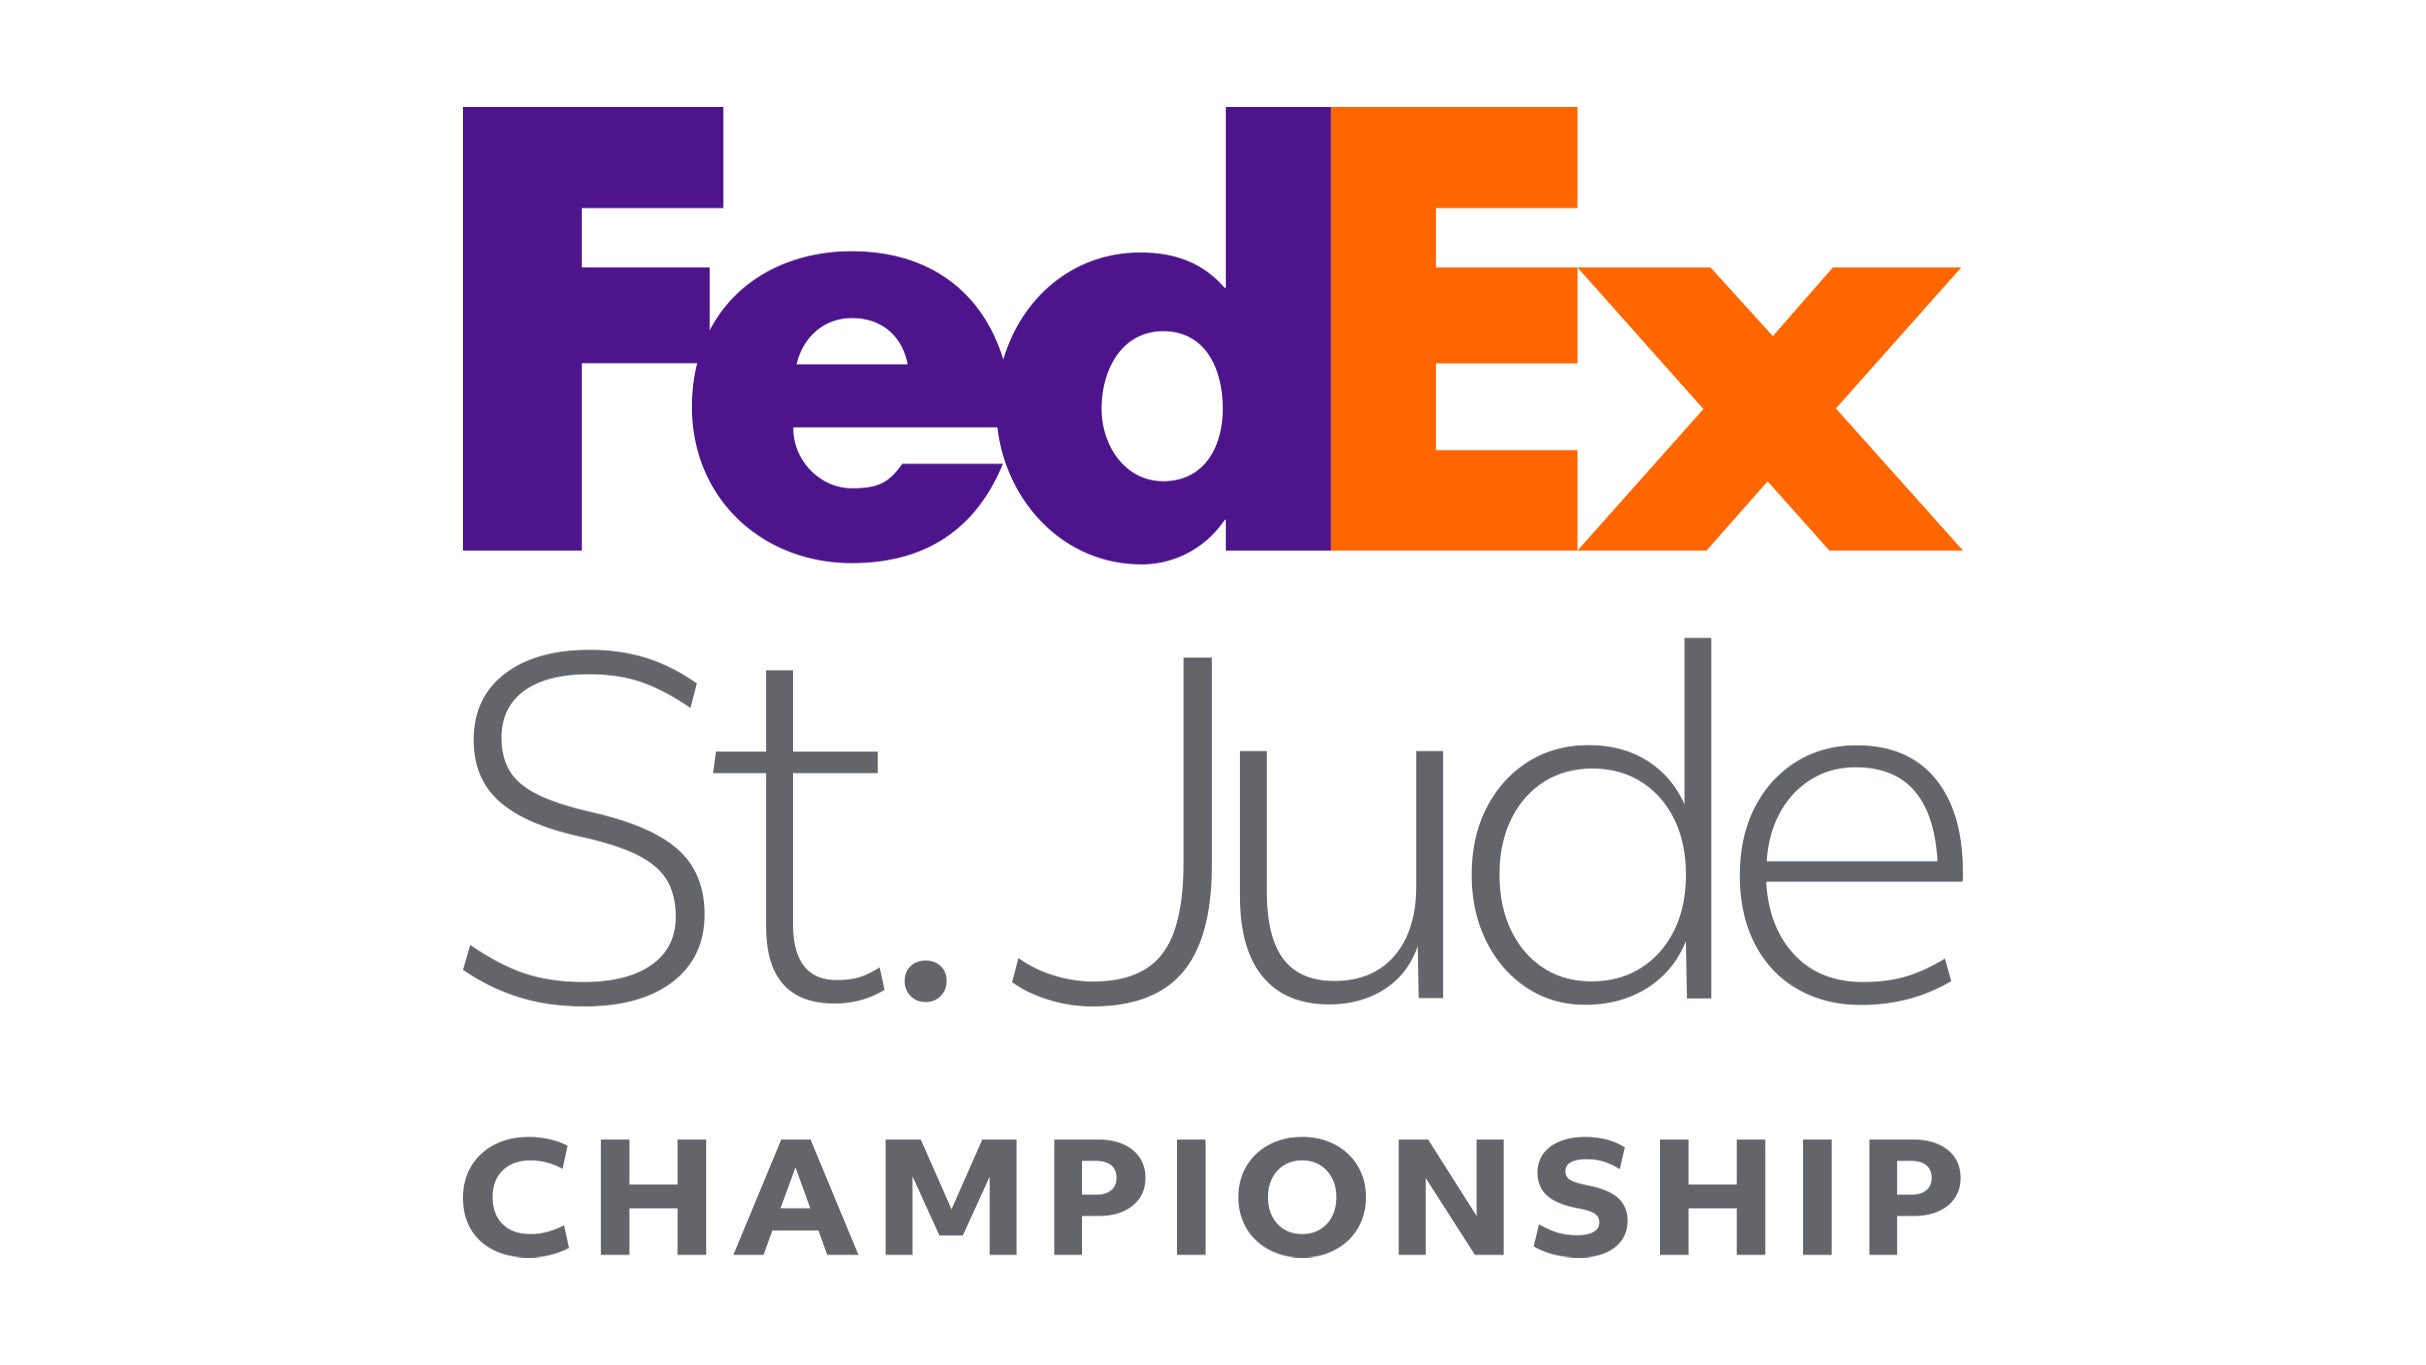 Fedex St. Jude Championship - Friday at TPC Southwind